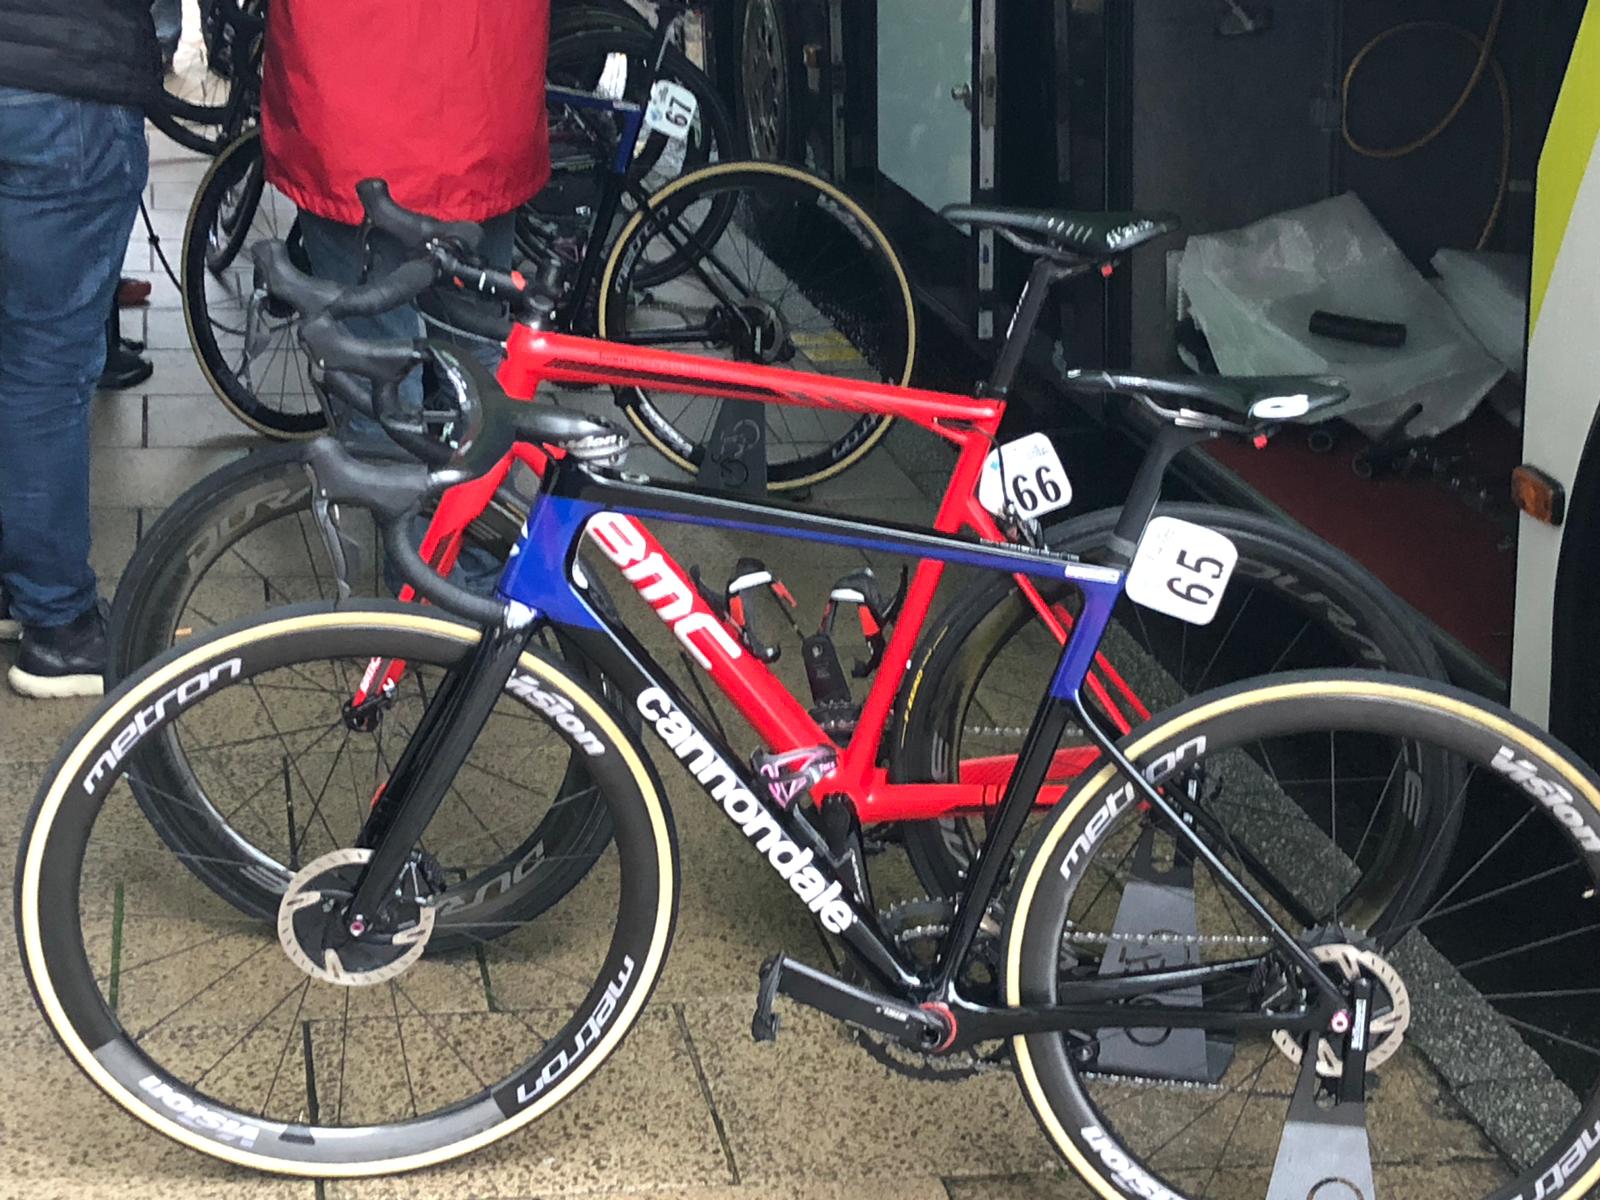 Rohan Dennis' red BMC bike for the World Championships